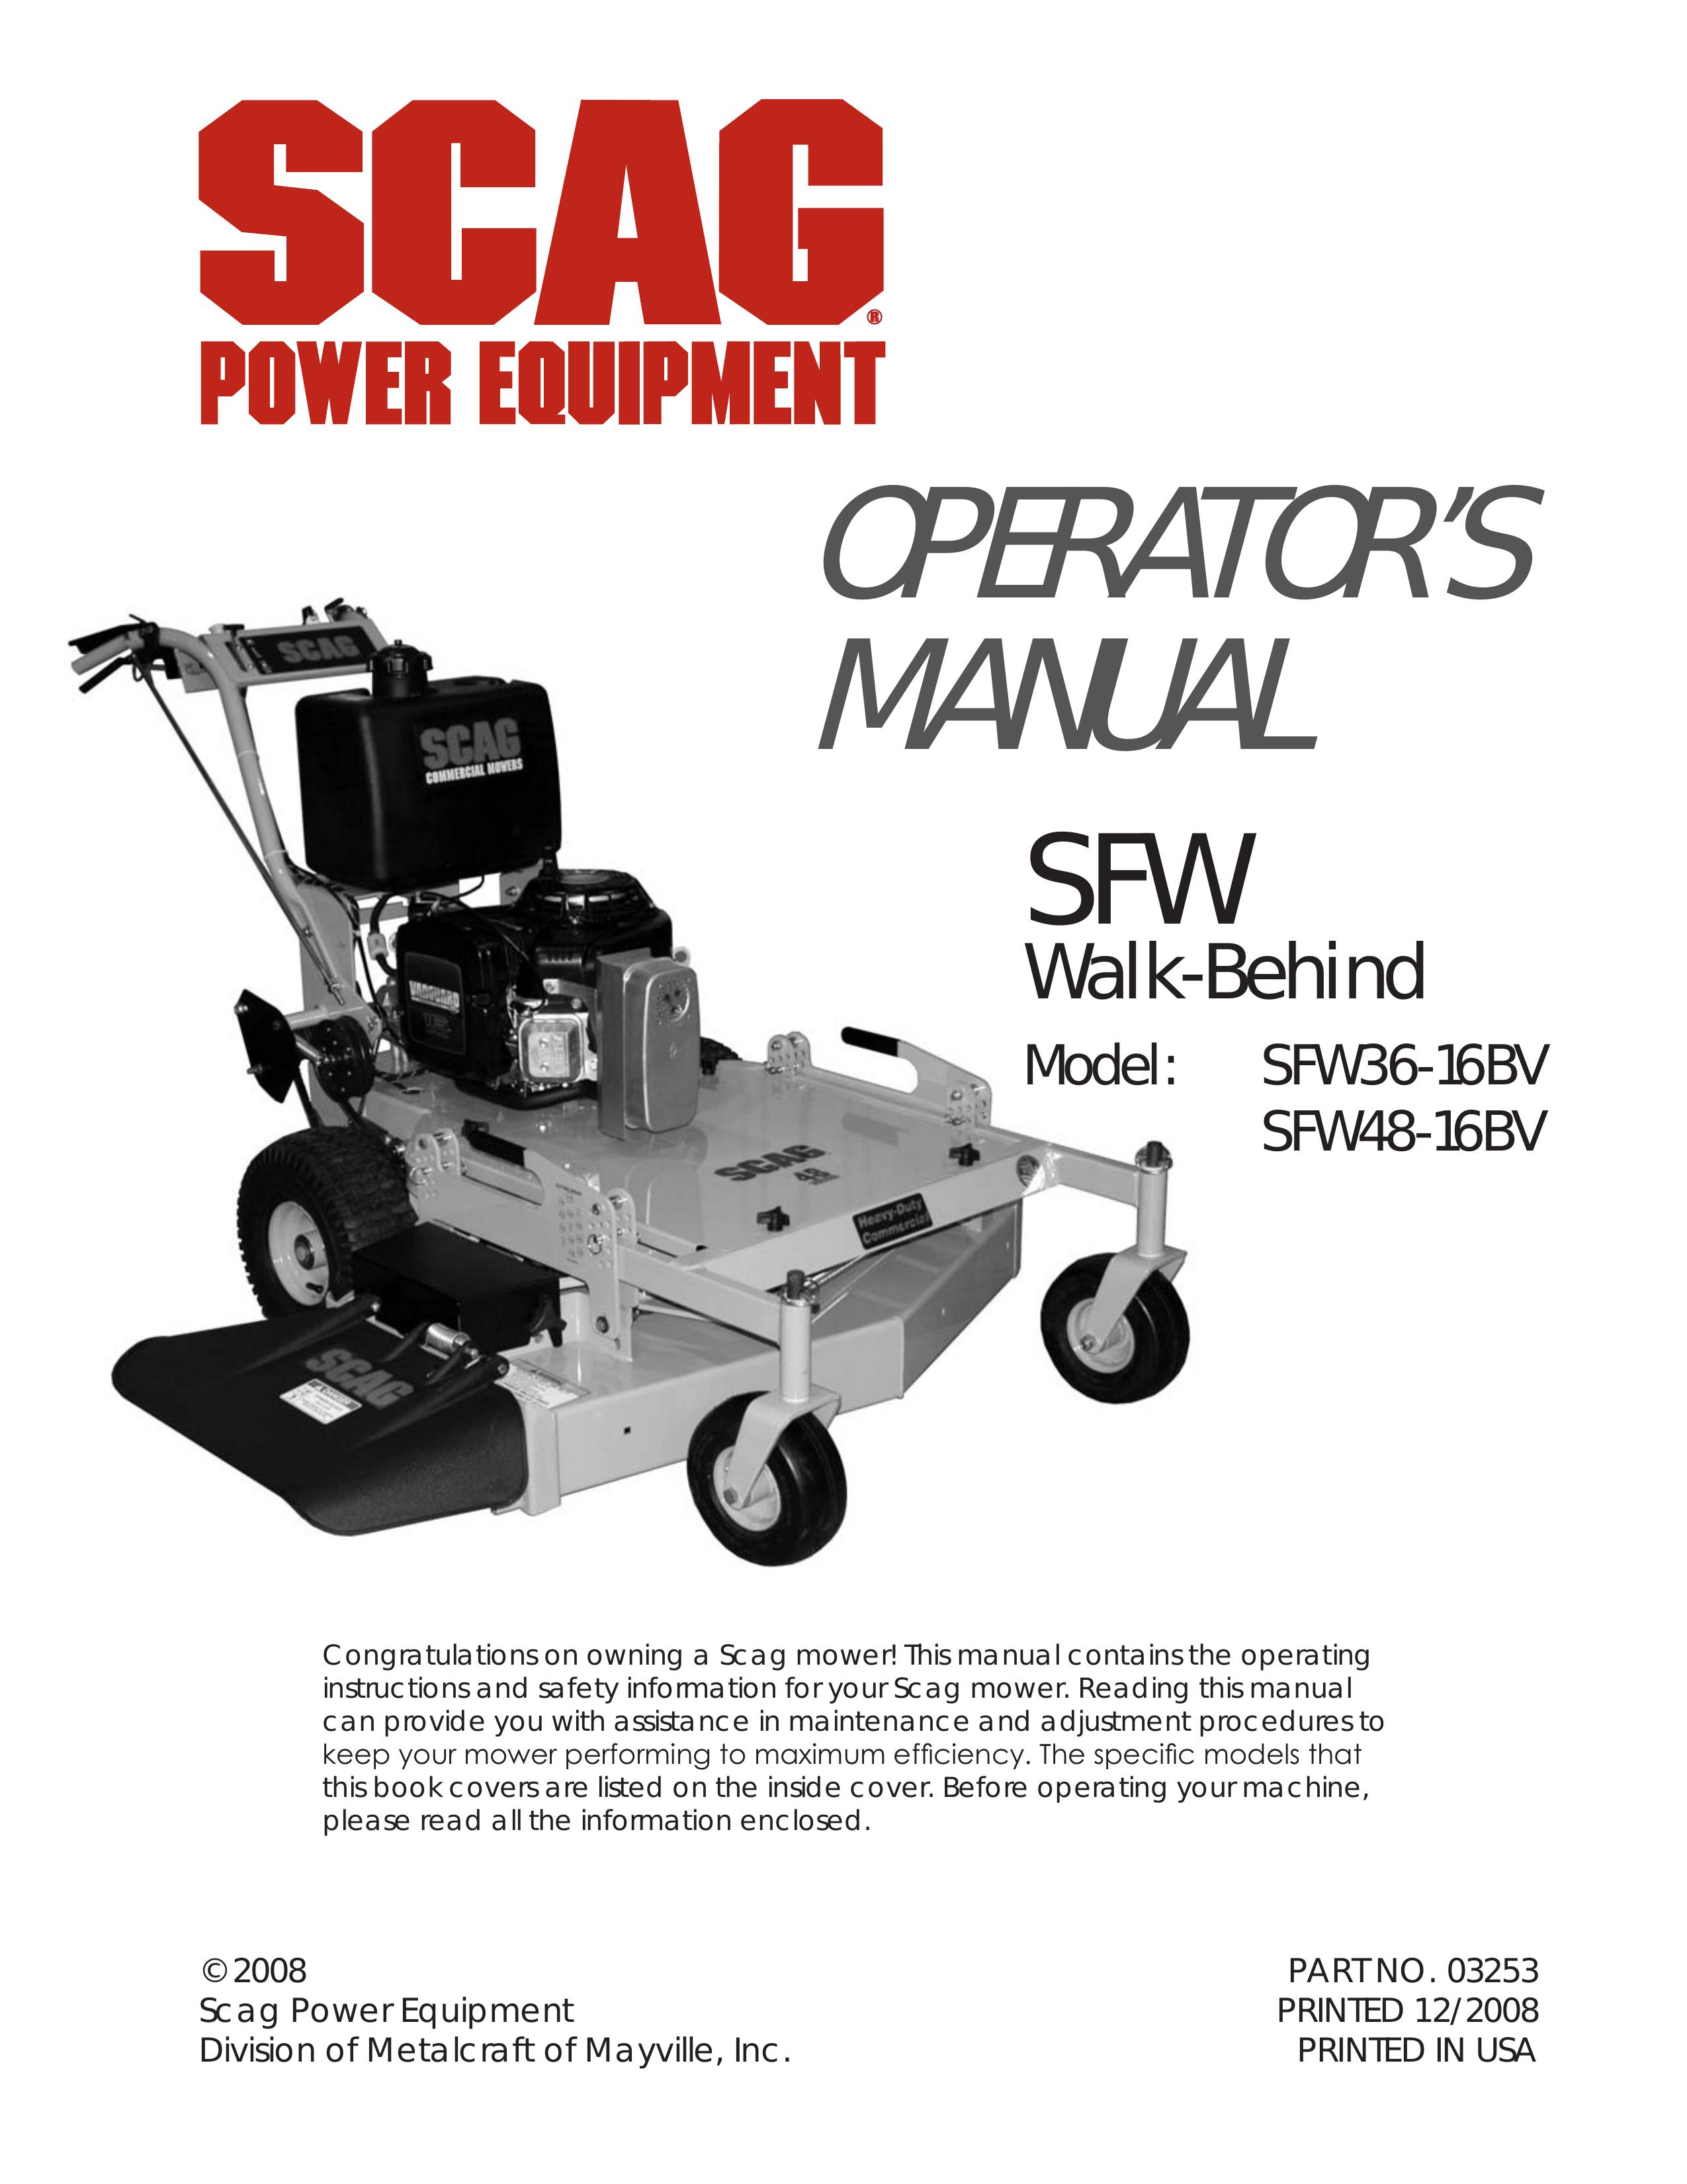 Scag Power Equipment SFW36-16BV Lawn Mower User Manual